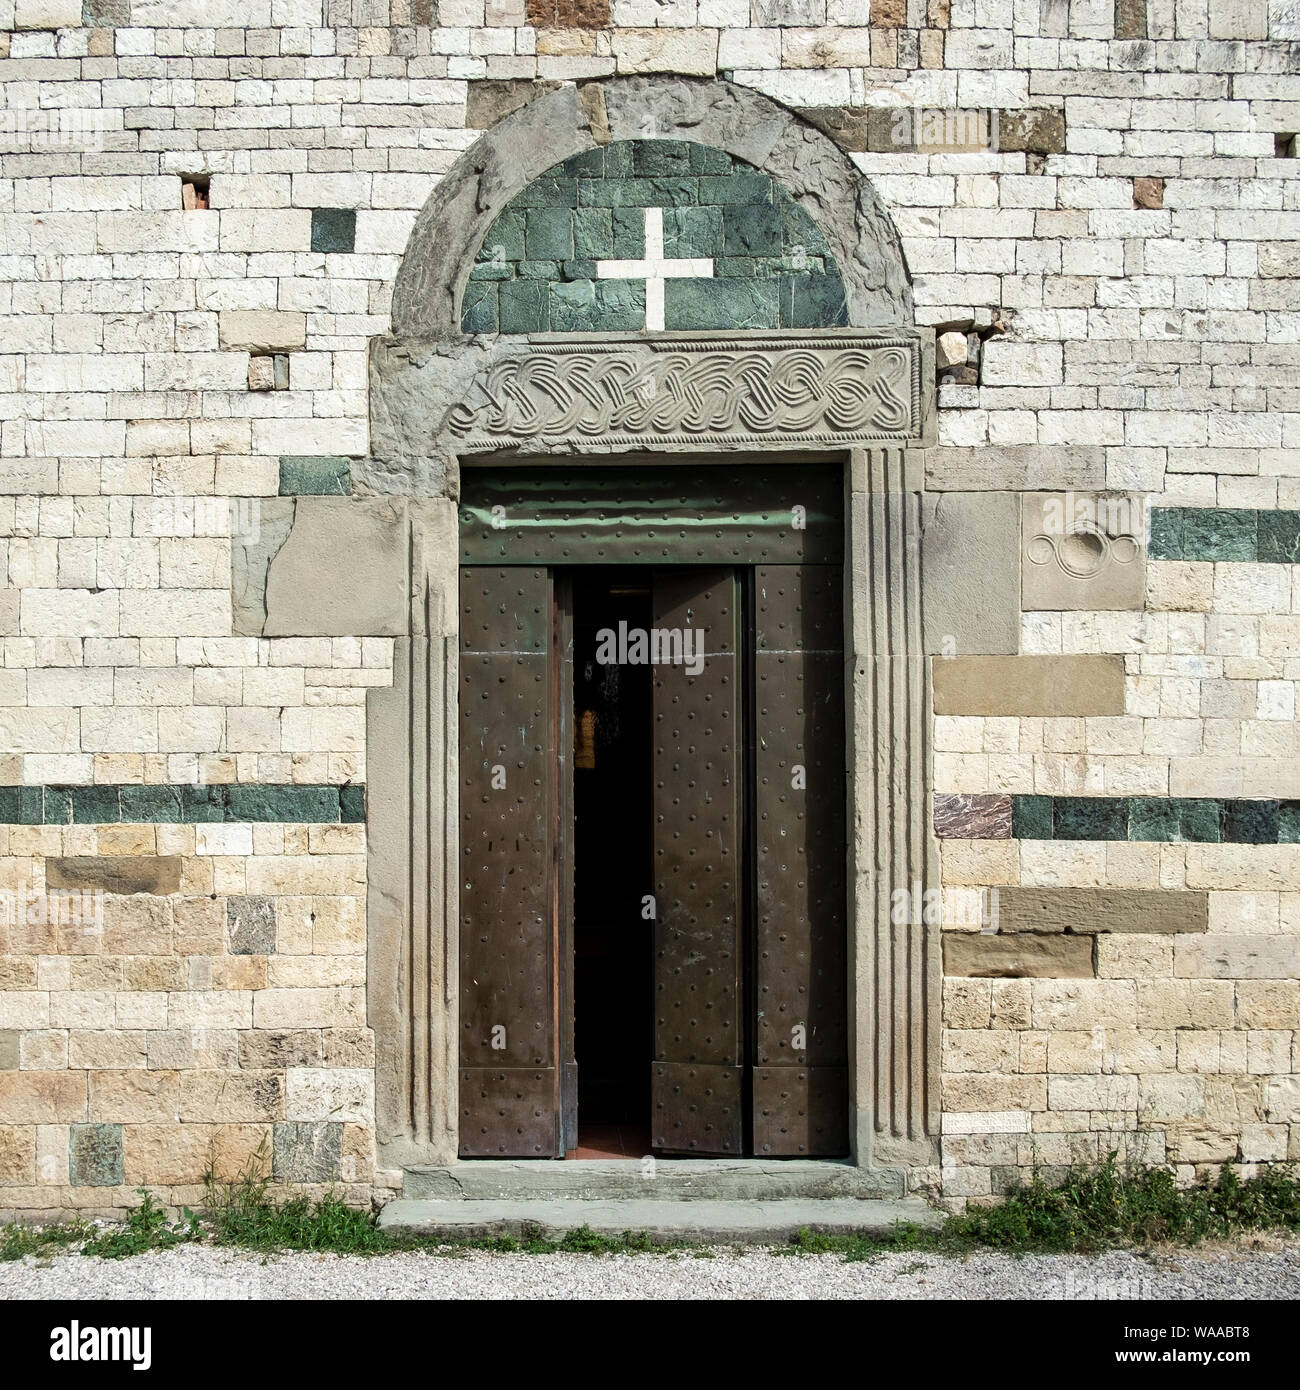 Detalle de la fachada de la iglesia románica de Sant'Agata. Sant'Agata, provincia de Florencia, Italia. Foto de stock